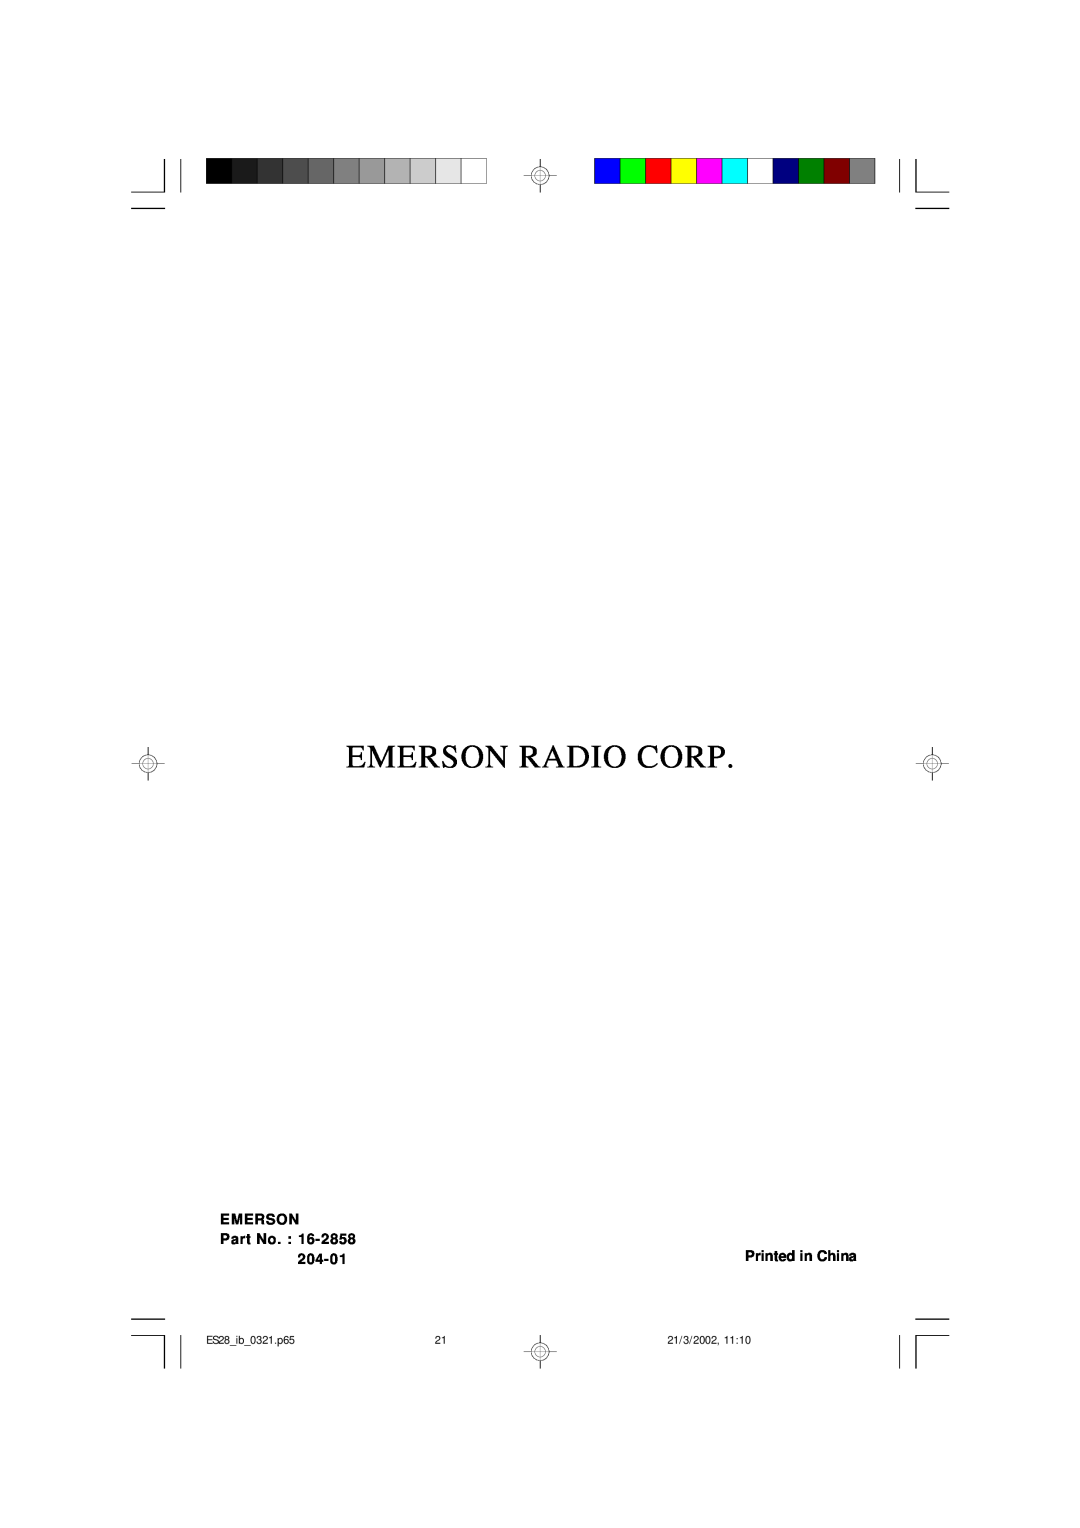 Emerson owner manual Emerson Radio Corp, 204-01, ES28 ib 0321.p65, 21/3/2002 